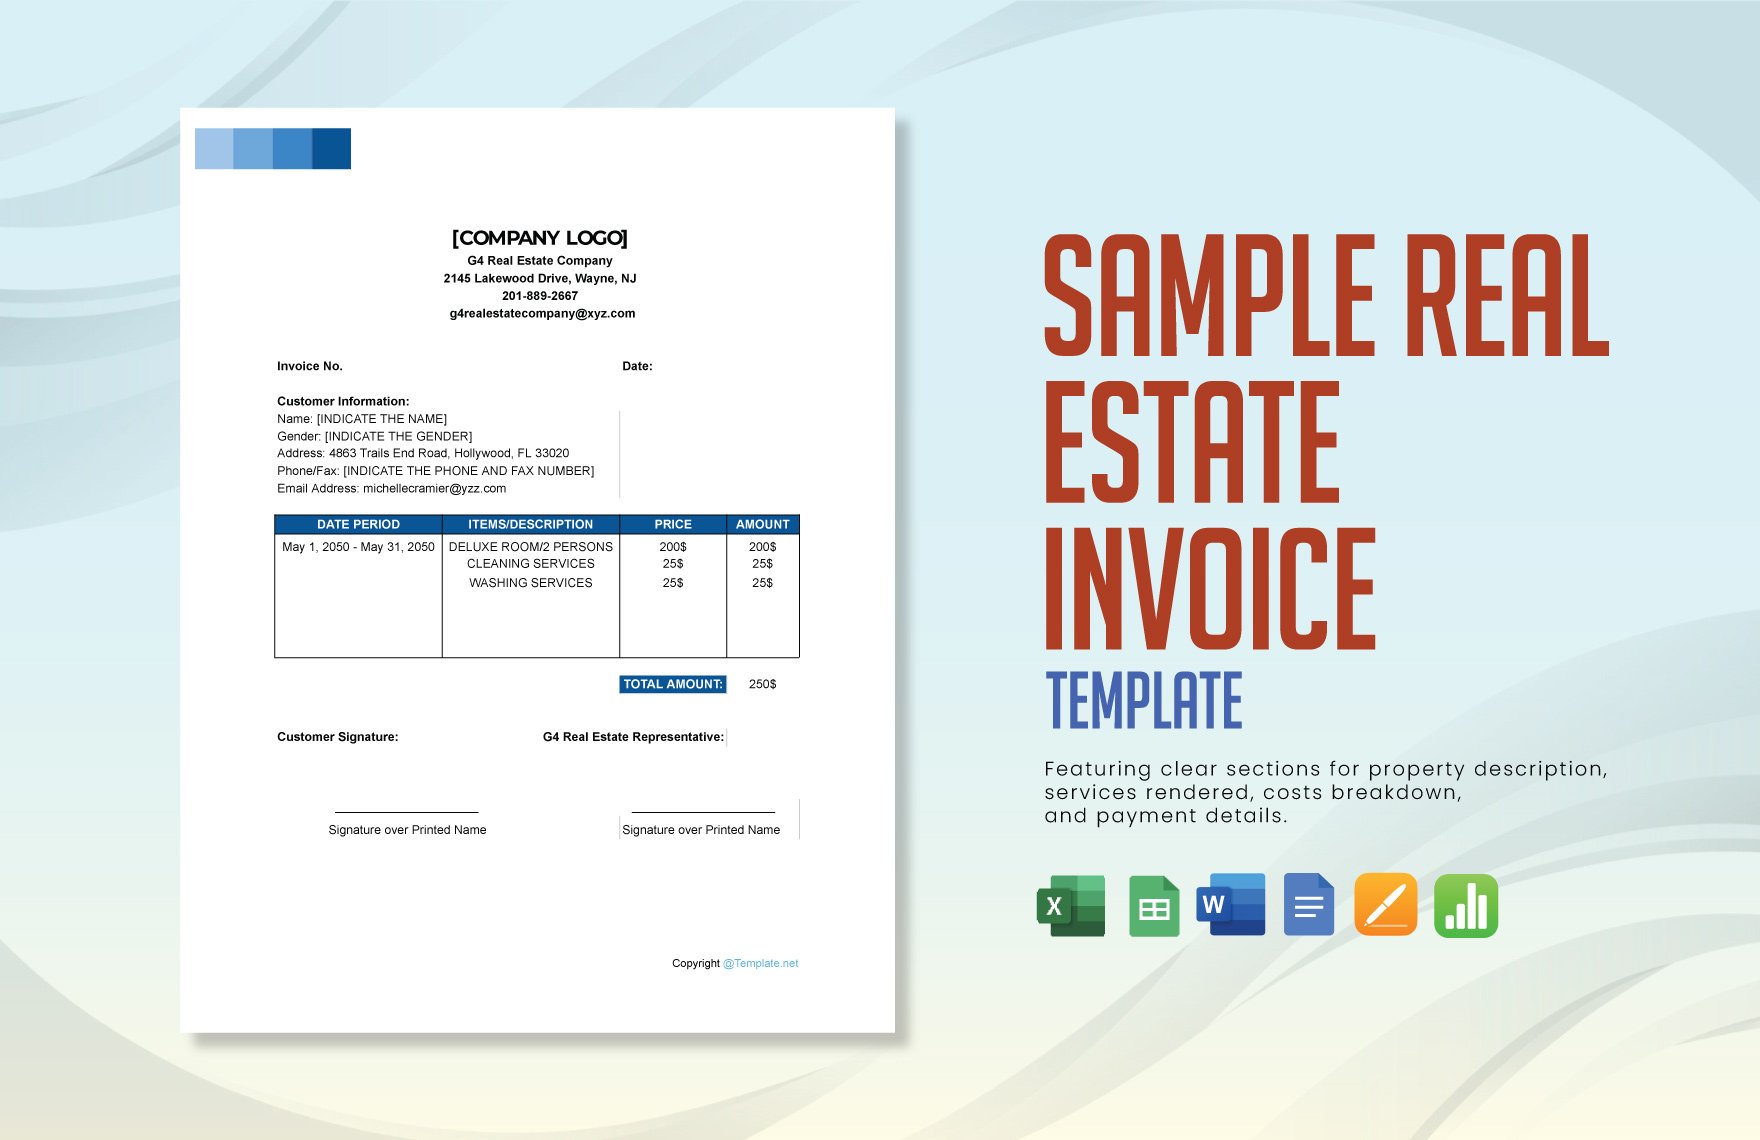 Sample Real Estate Invoice Template